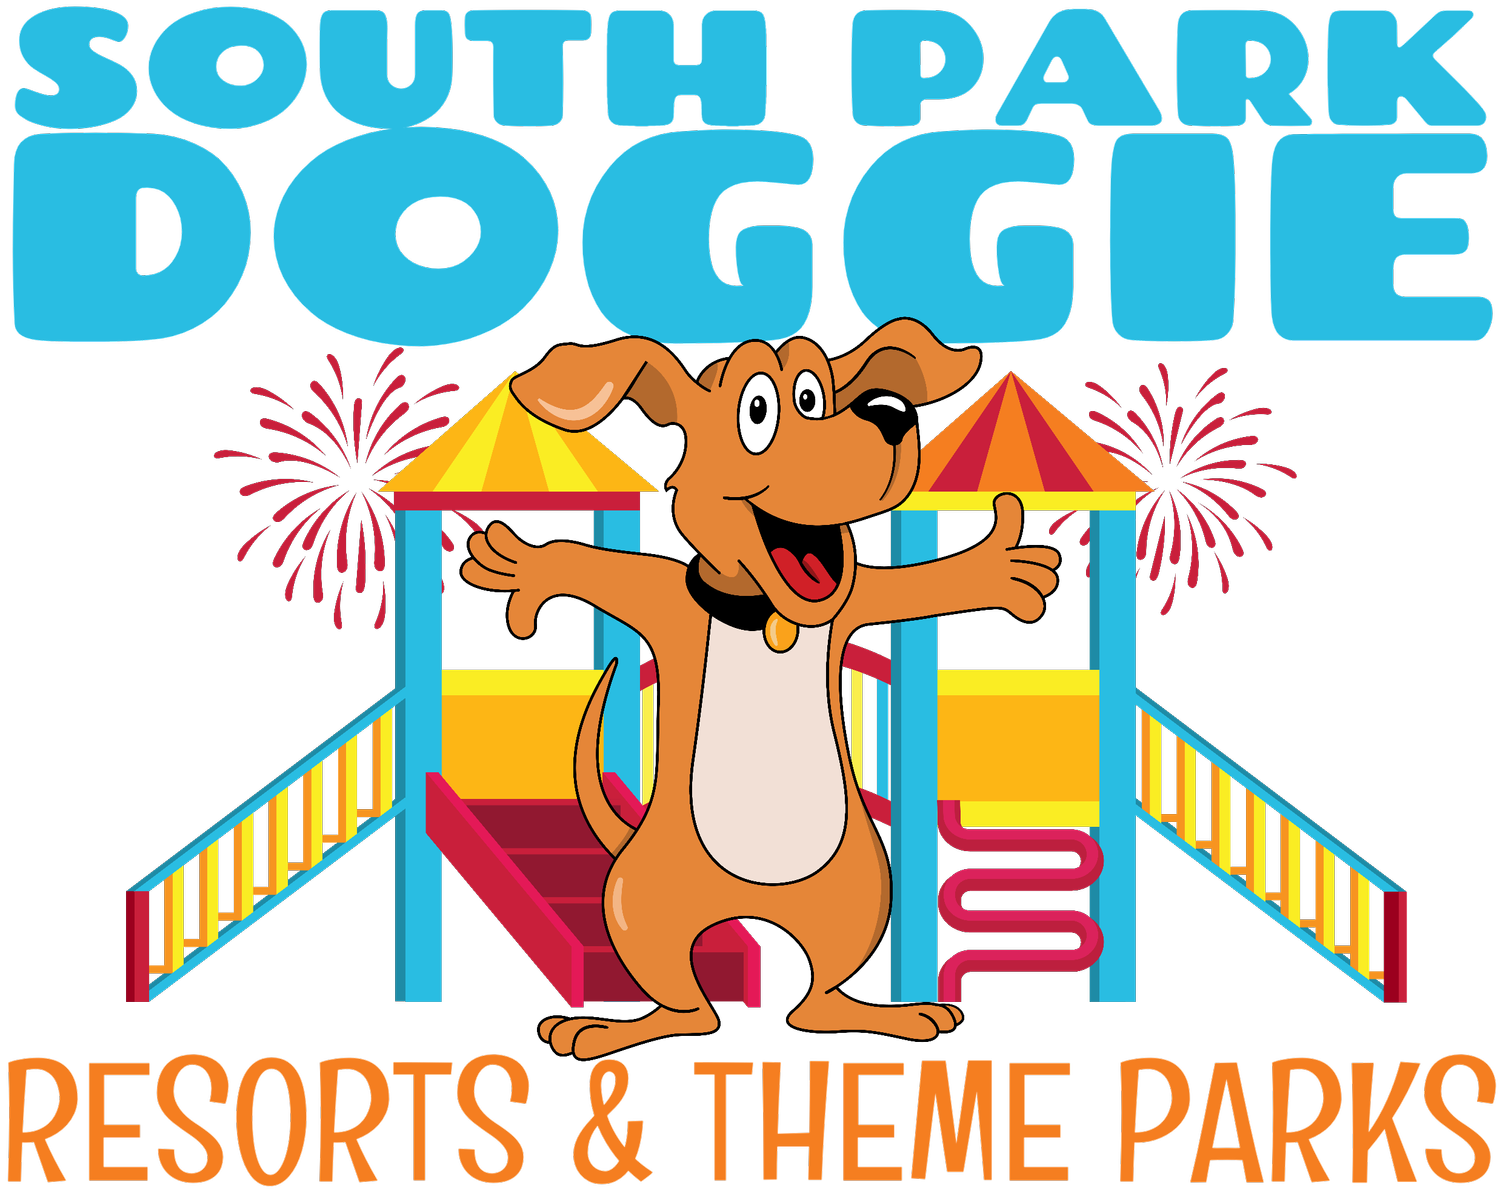 South Park Doggie - Adventureland | South Bay